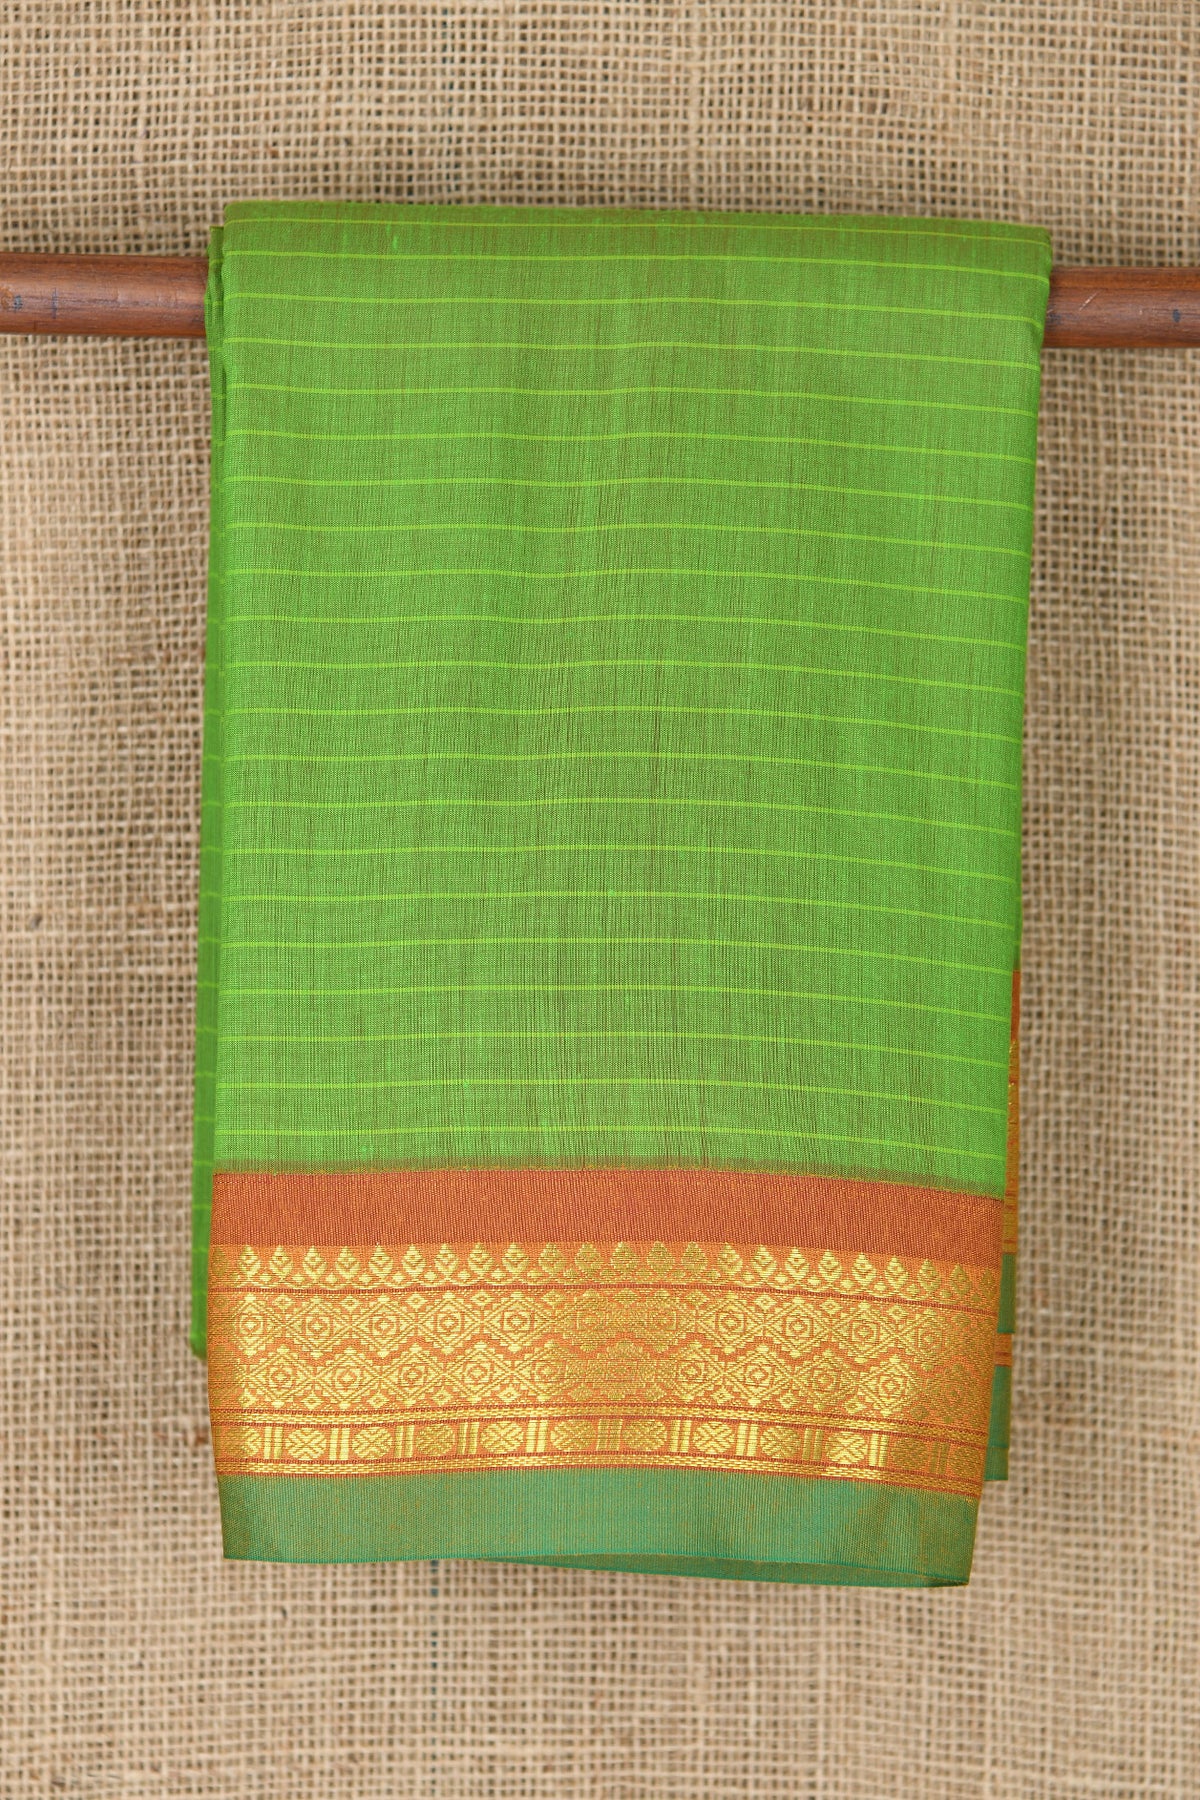 Contrast Rudraksh Zari Border With Stripes Parrot Green Apoorva Cotton Saree